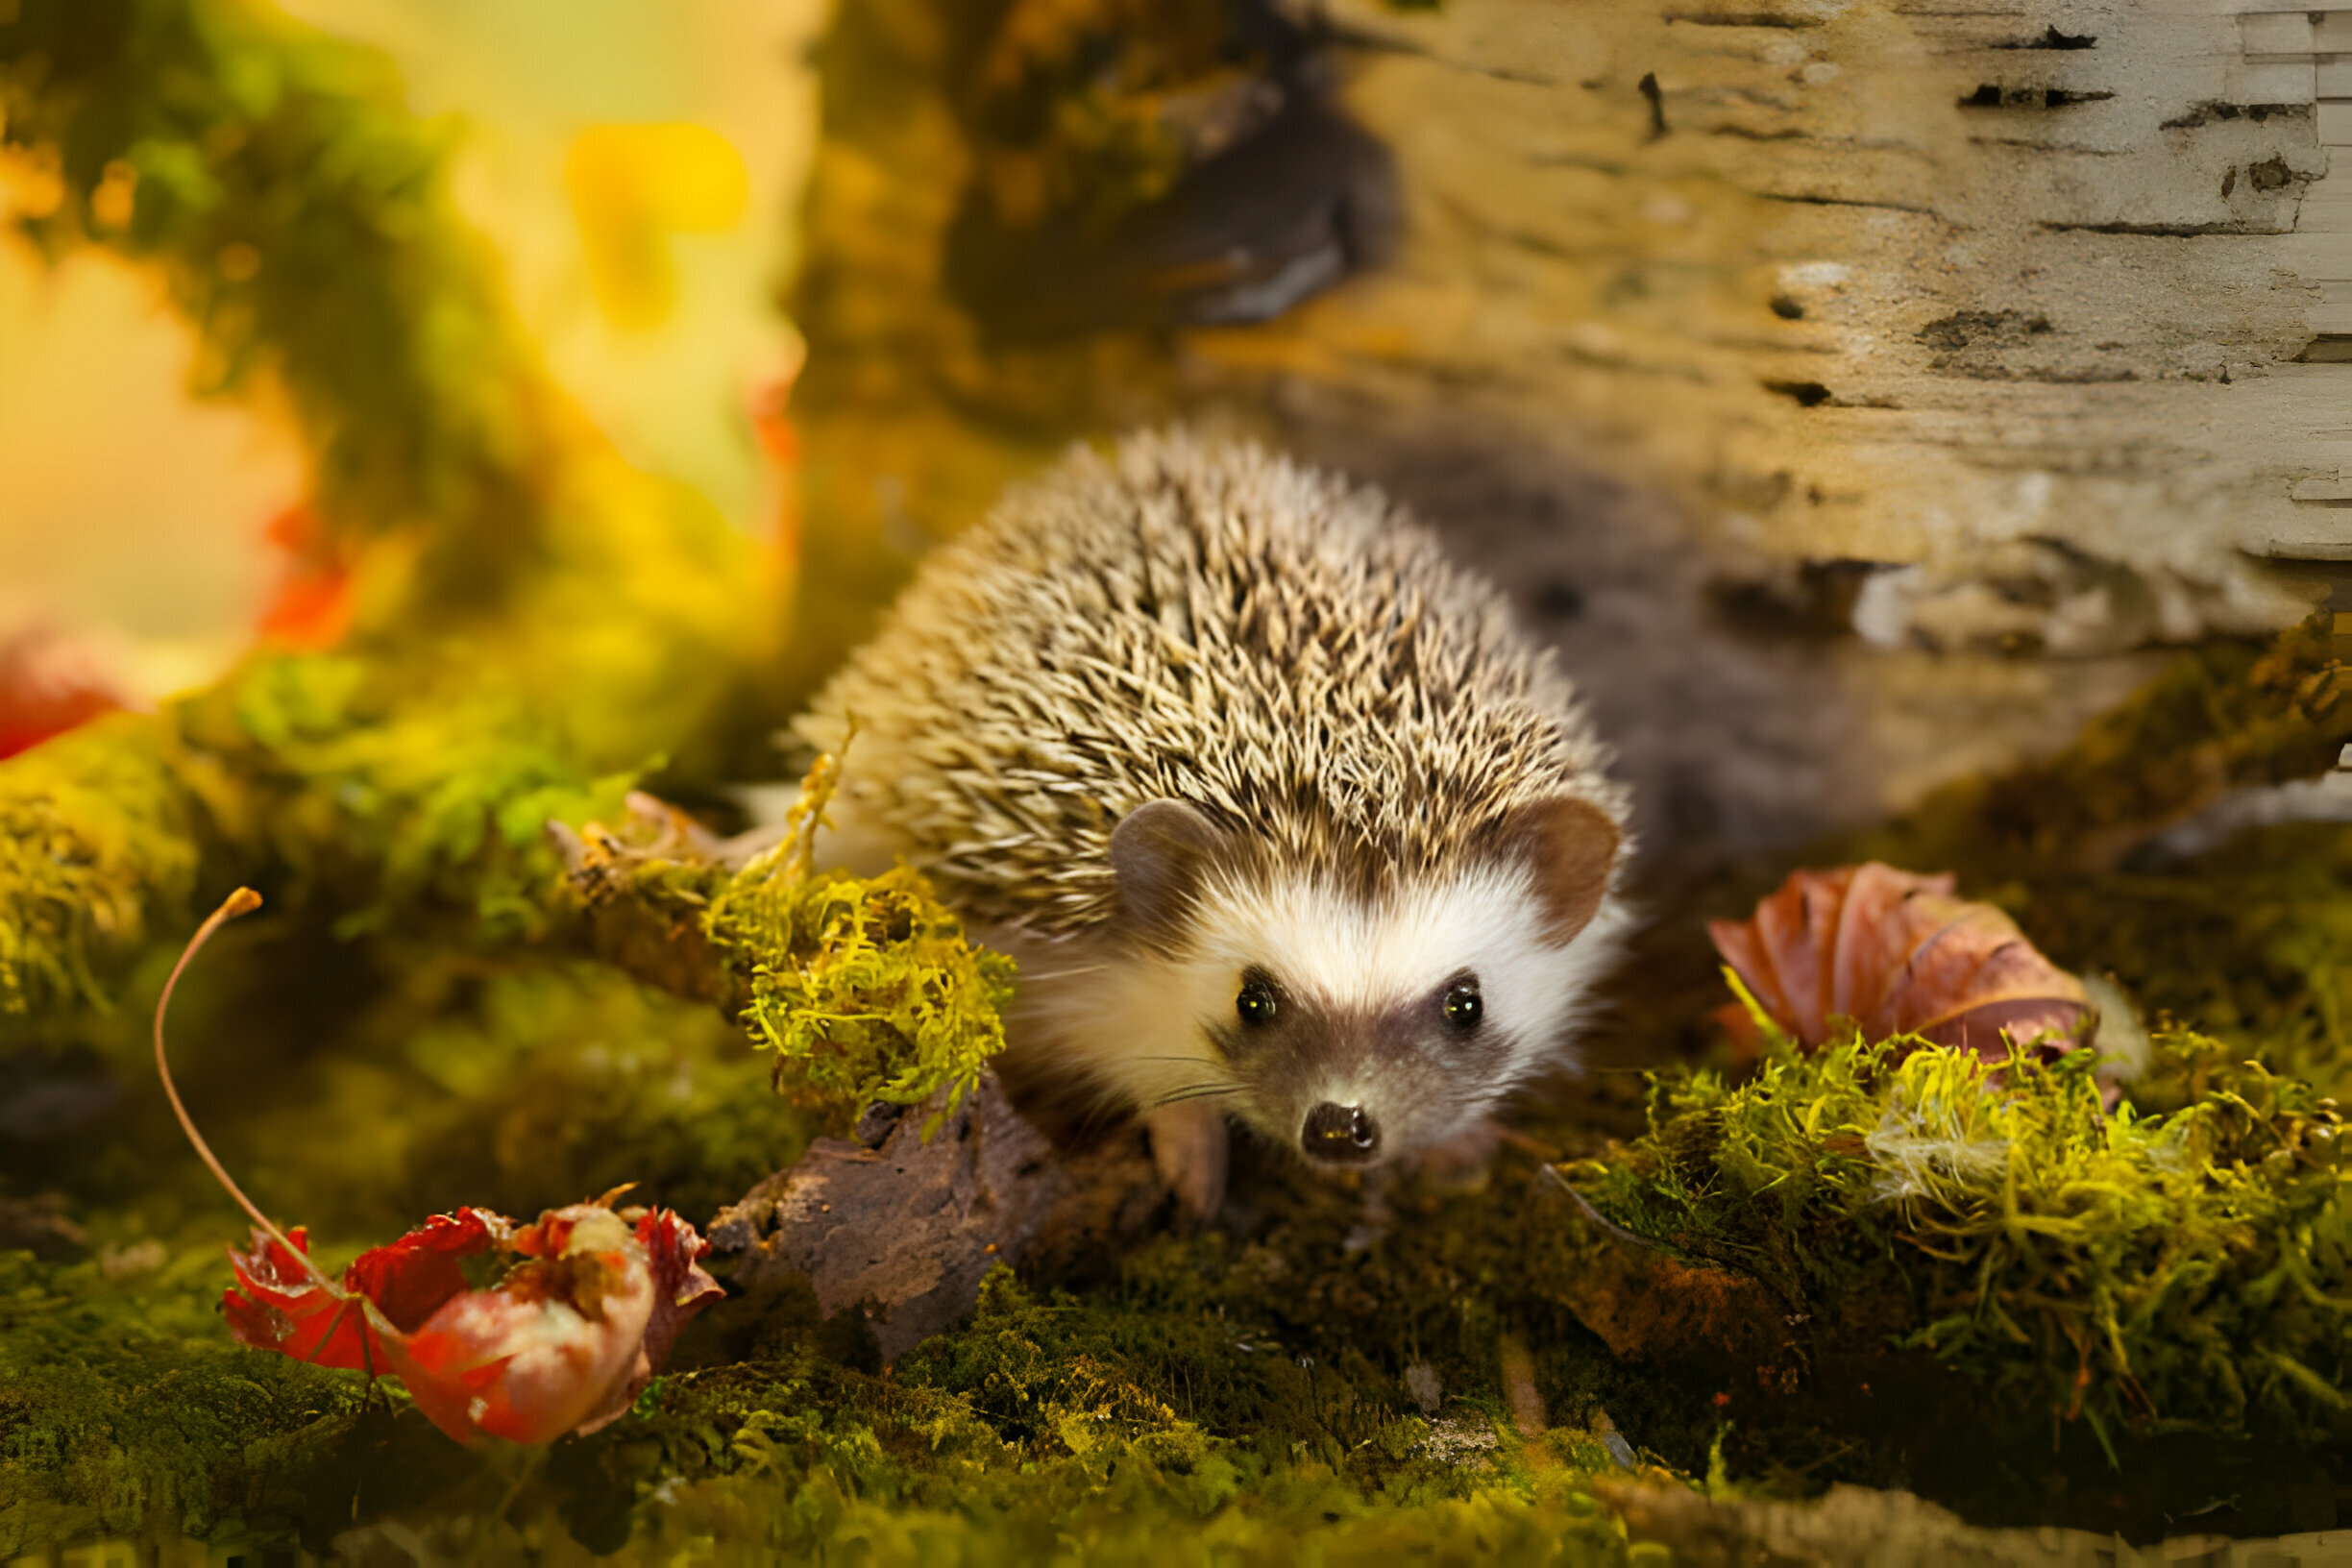 Hedgehog don't lay eggs